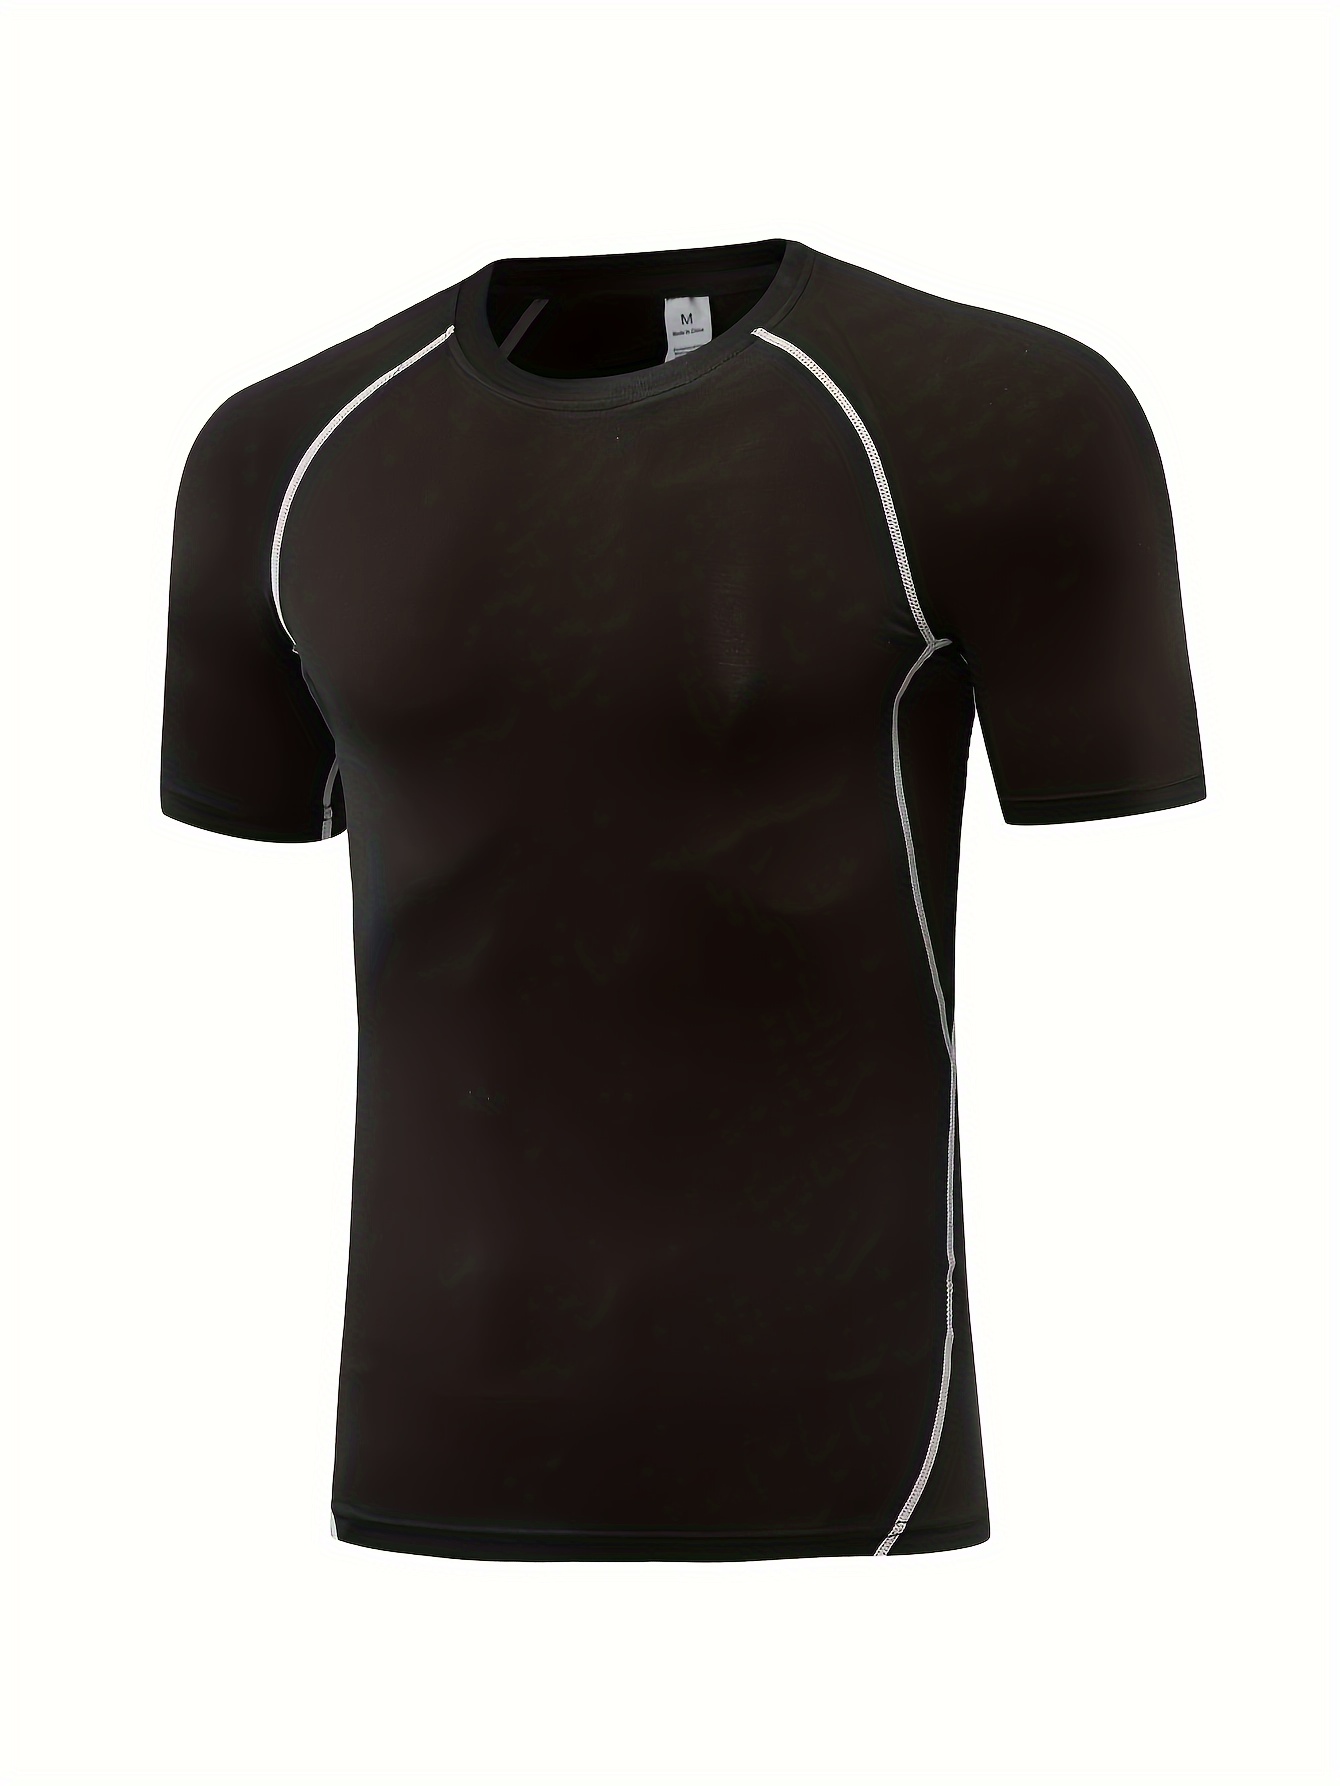 1pc Men's Camo Compression Elastic Quick-dry Sports Short Sleeve T